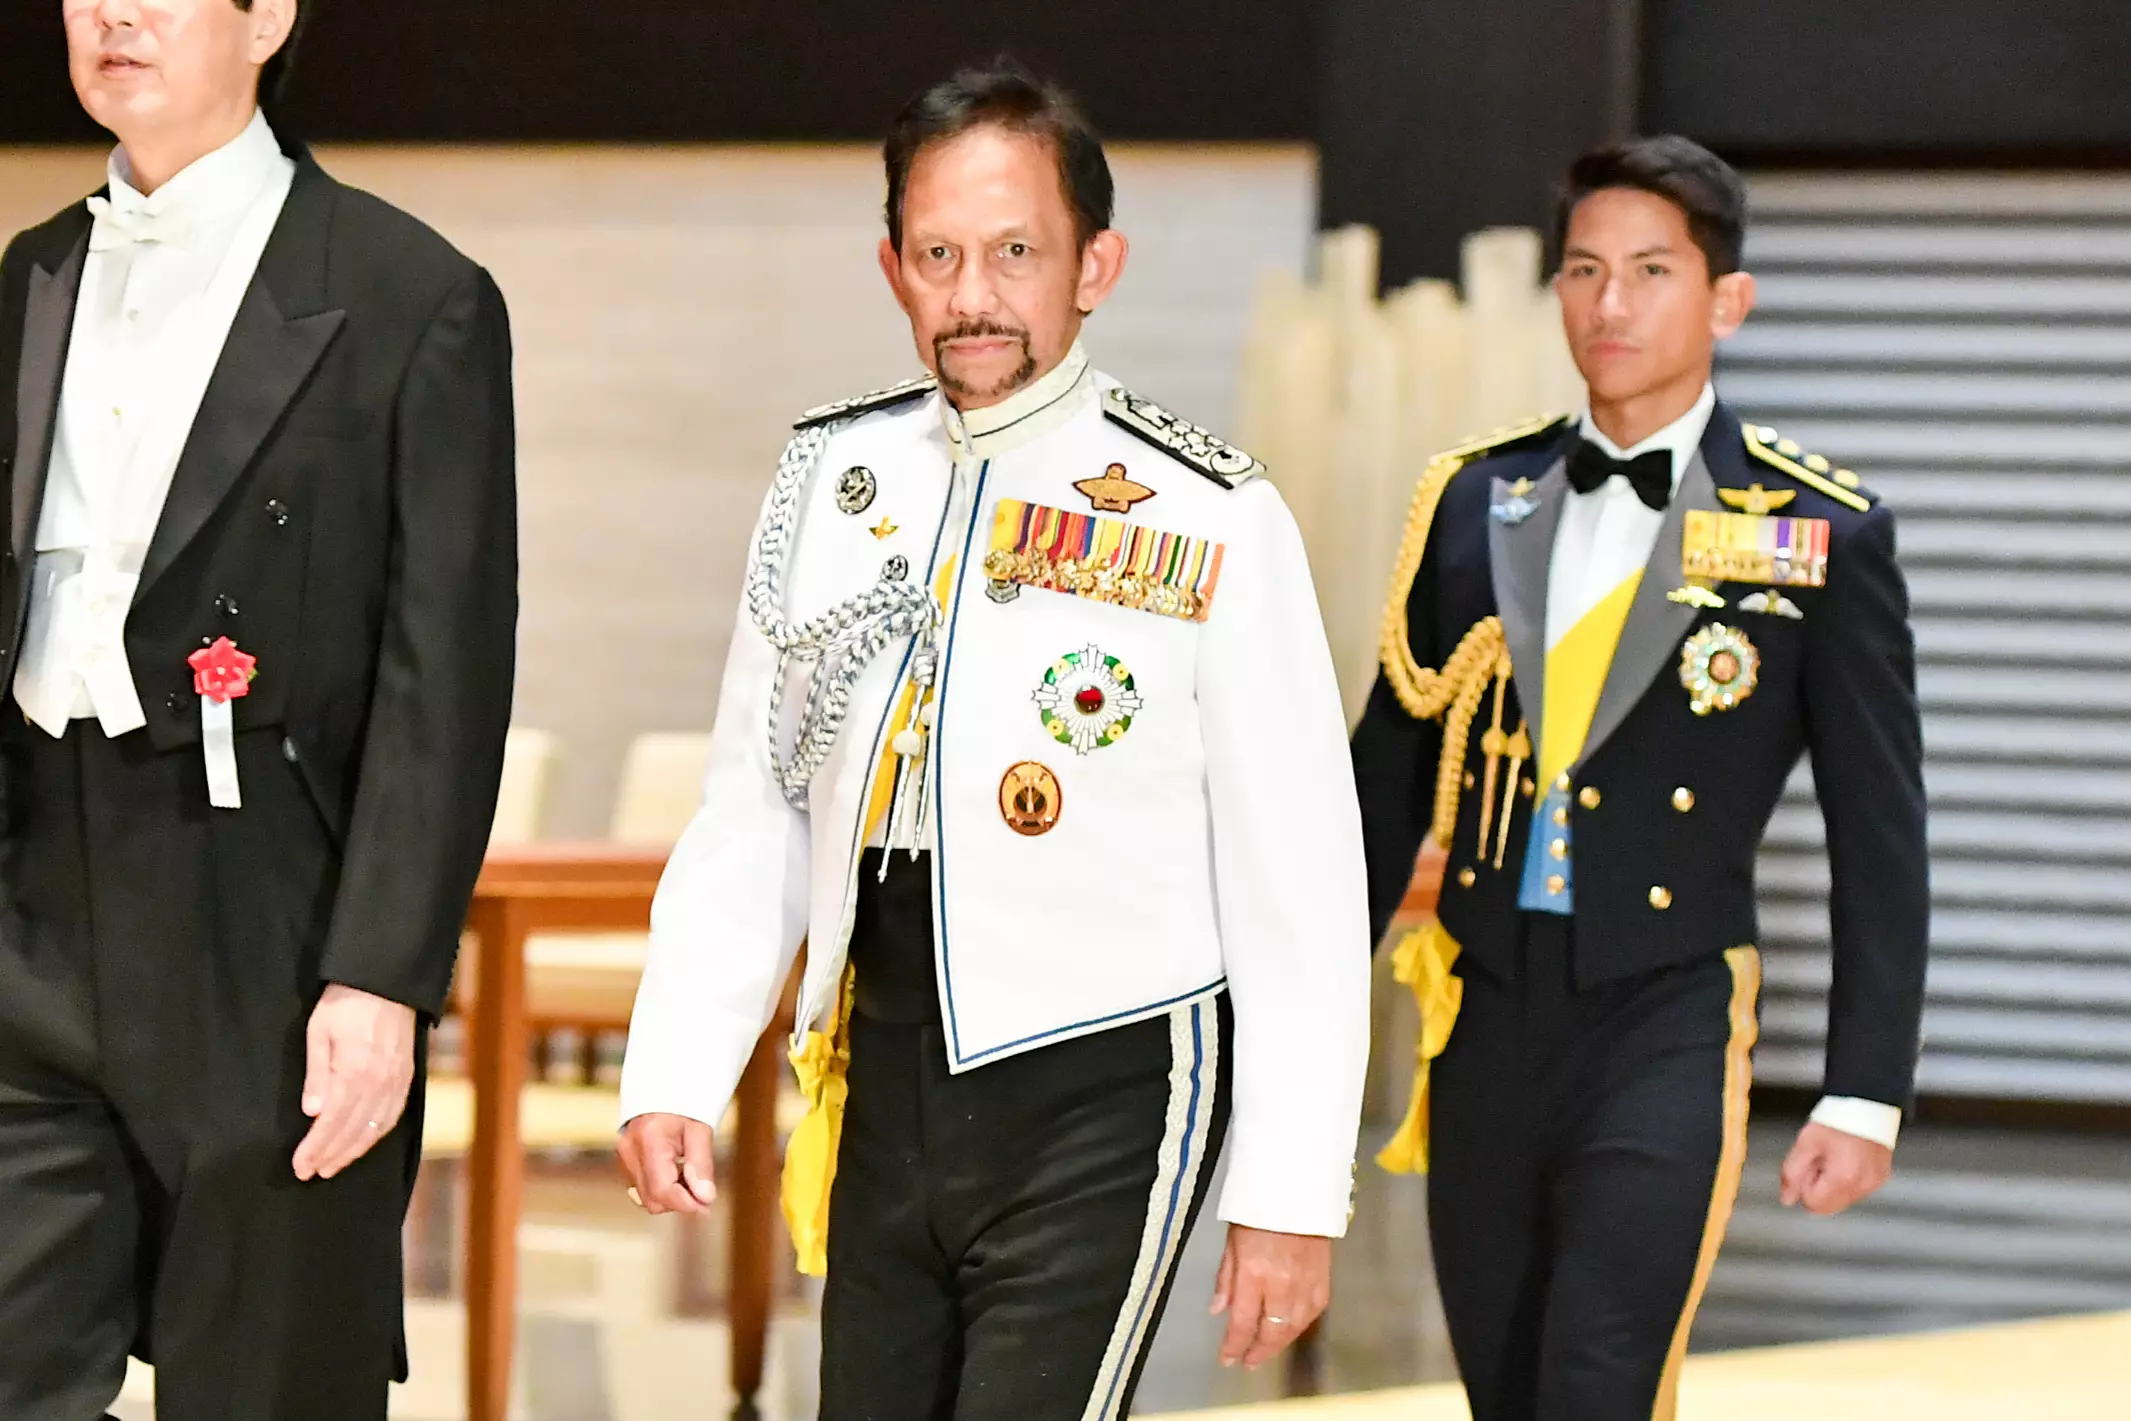 Faiq's uncle is the Sultan of Brunei. Image: PA Images